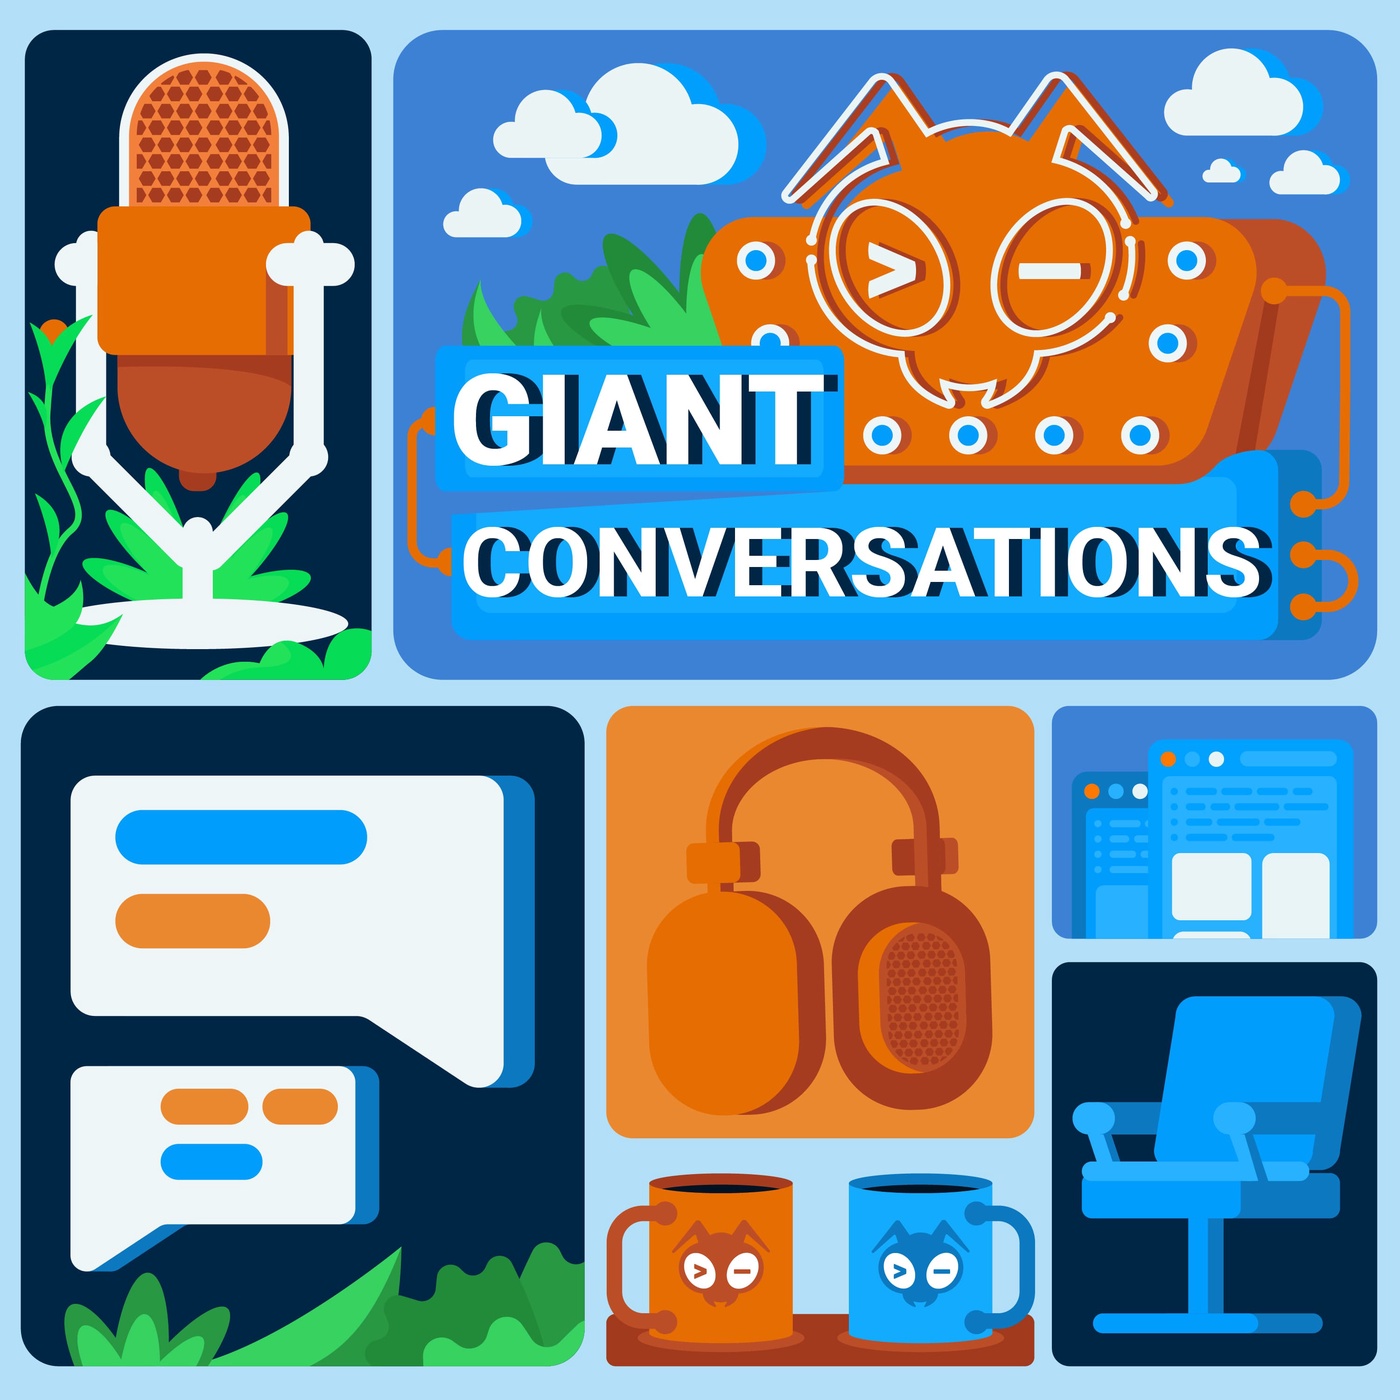 Giant Conversations